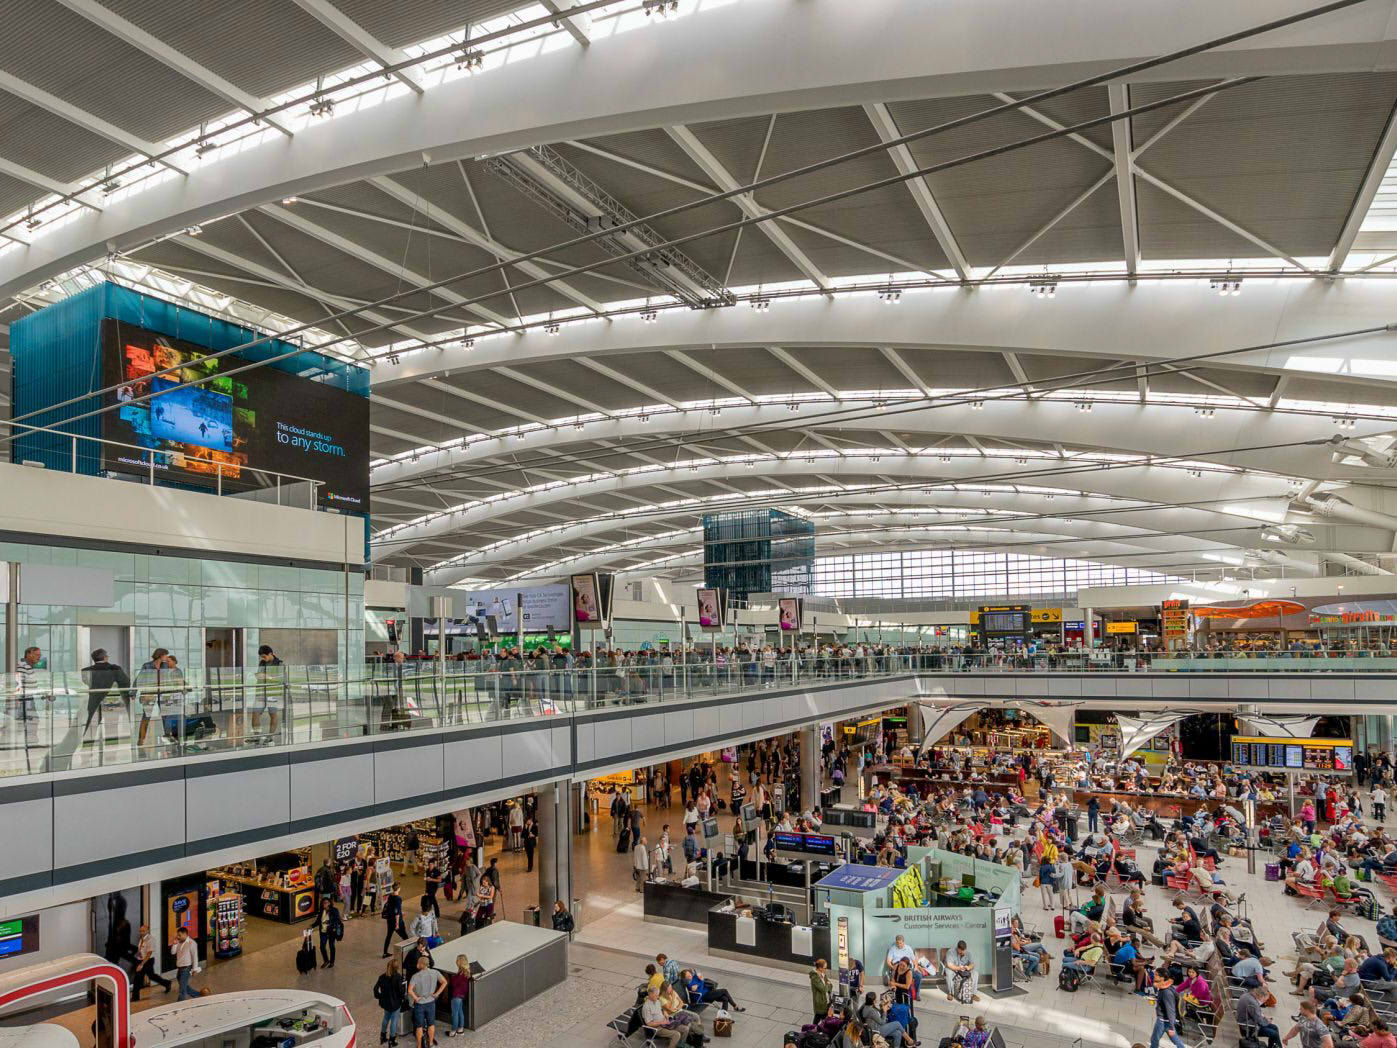 Airport CEO thinks temperature checks on passengers may stick around after coronavirus